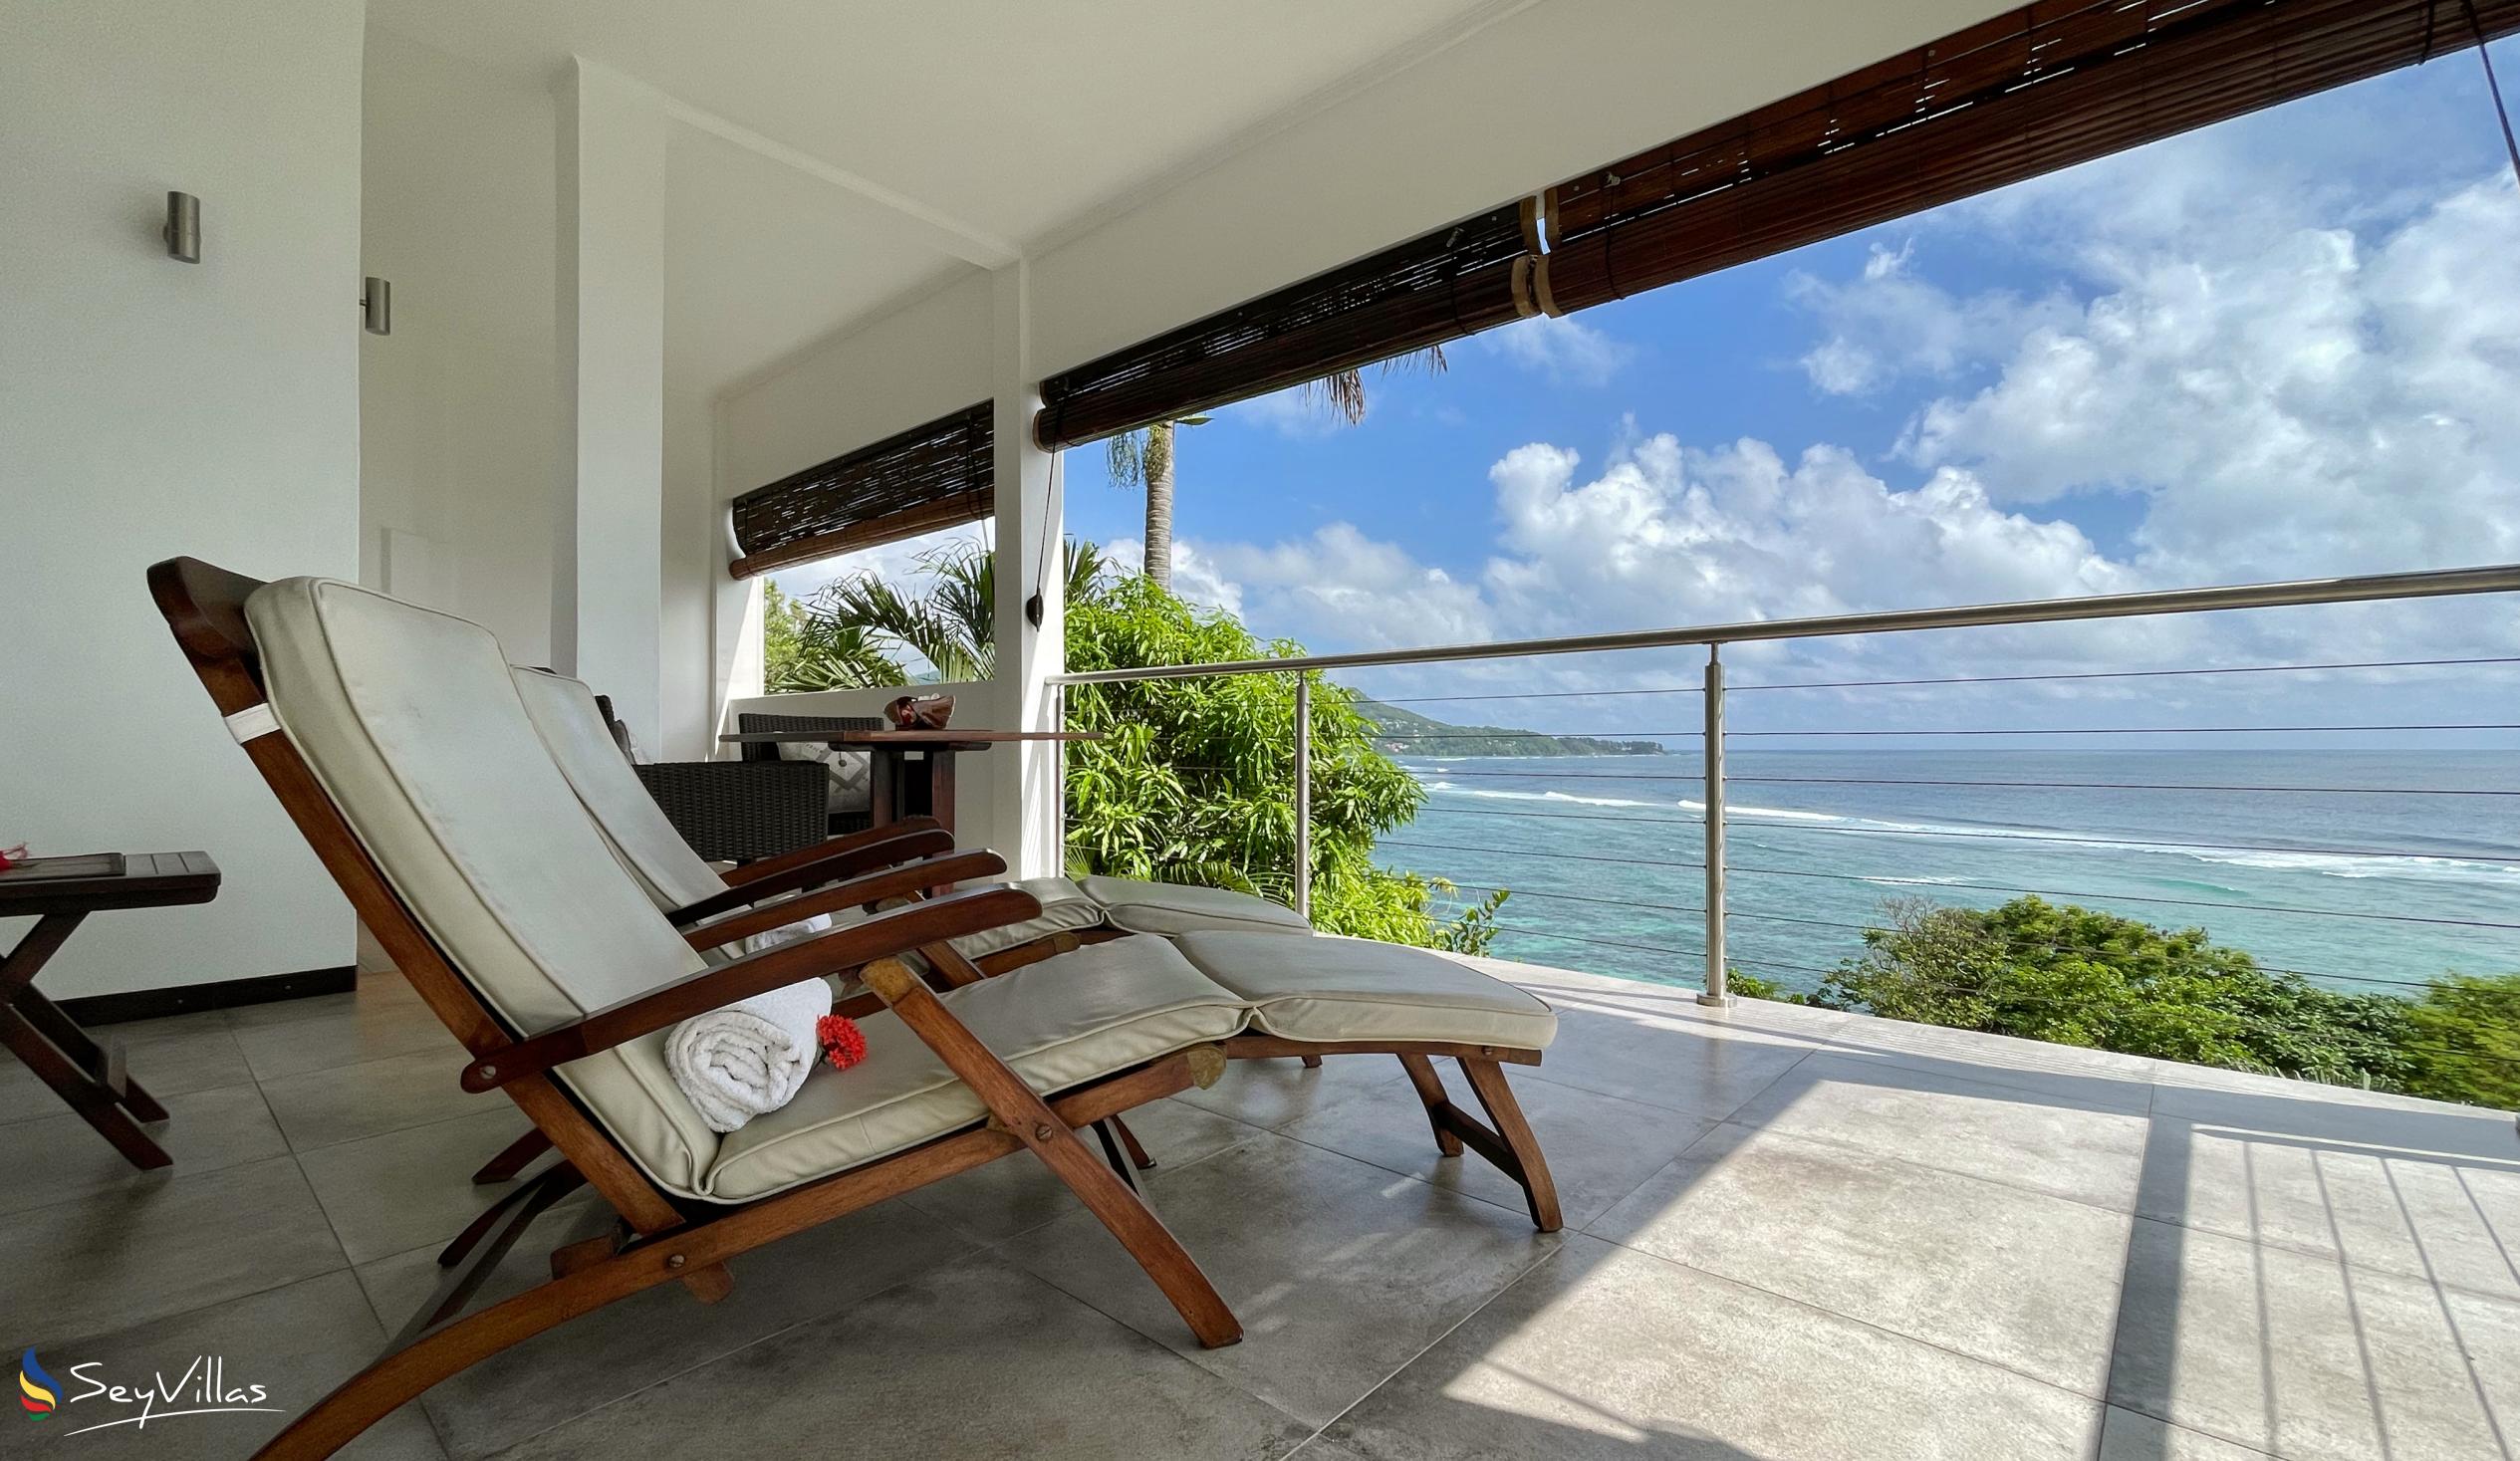 Foto 101: Chalets Bougainville - Appartamento Piano Terra Villa Lemon - Mahé (Seychelles)